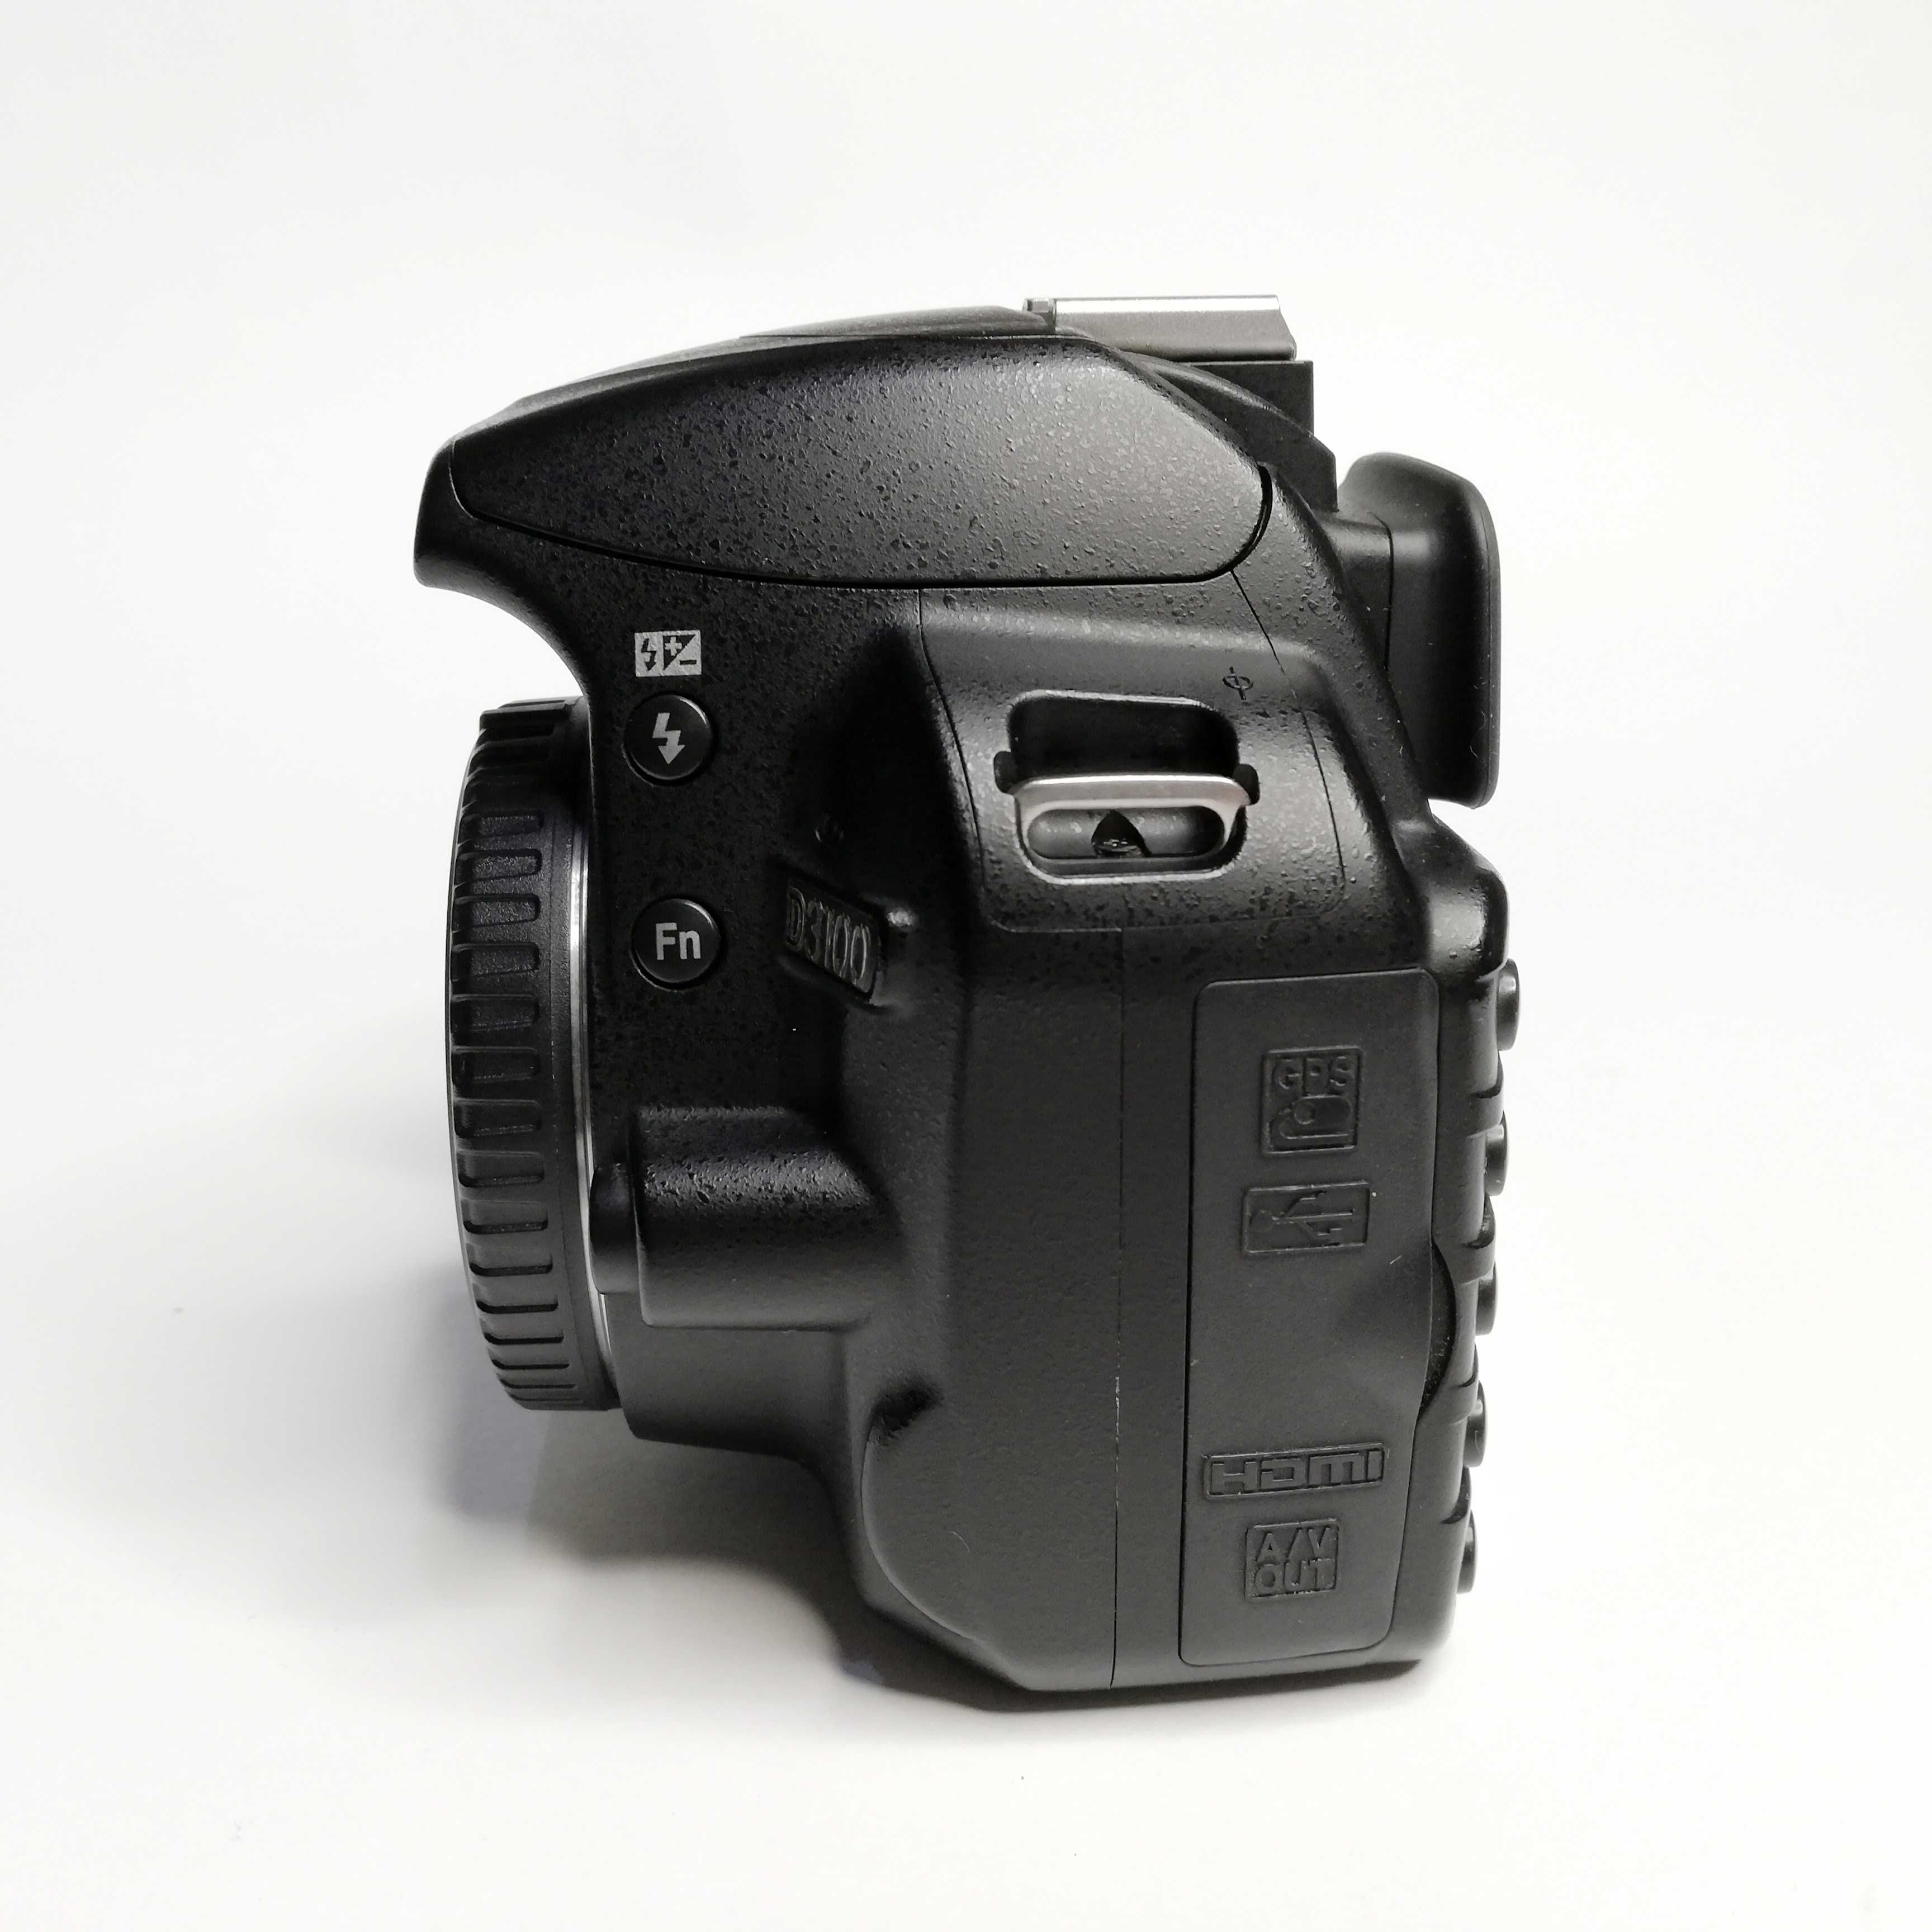 Nikon D3100+18-55 VR, у объектива сломан хобот, но все работает